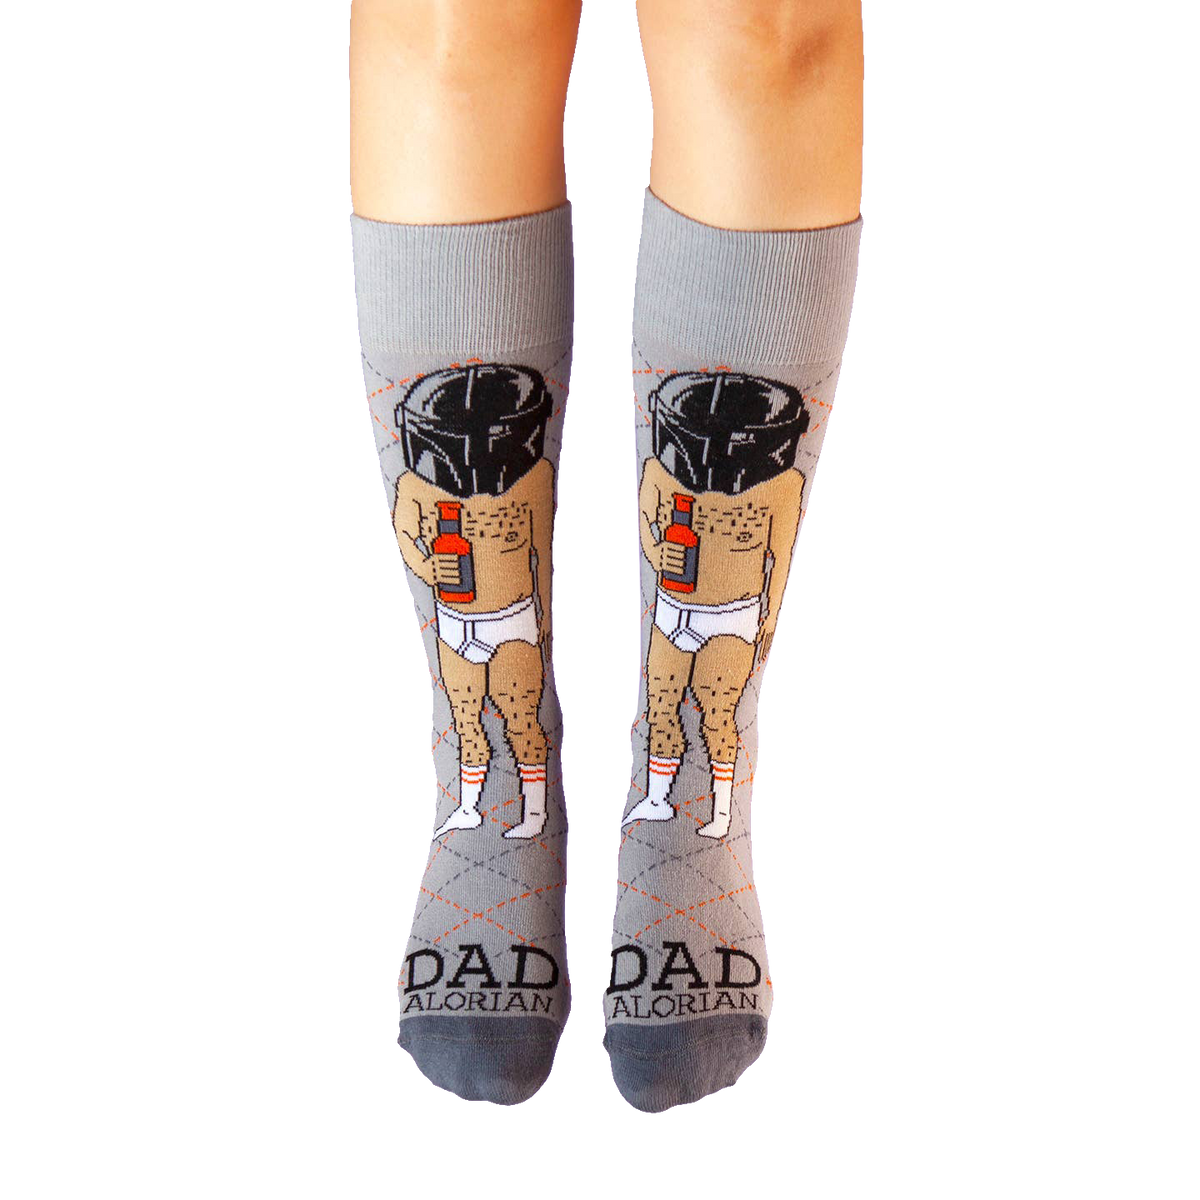 Dadalorian Socks